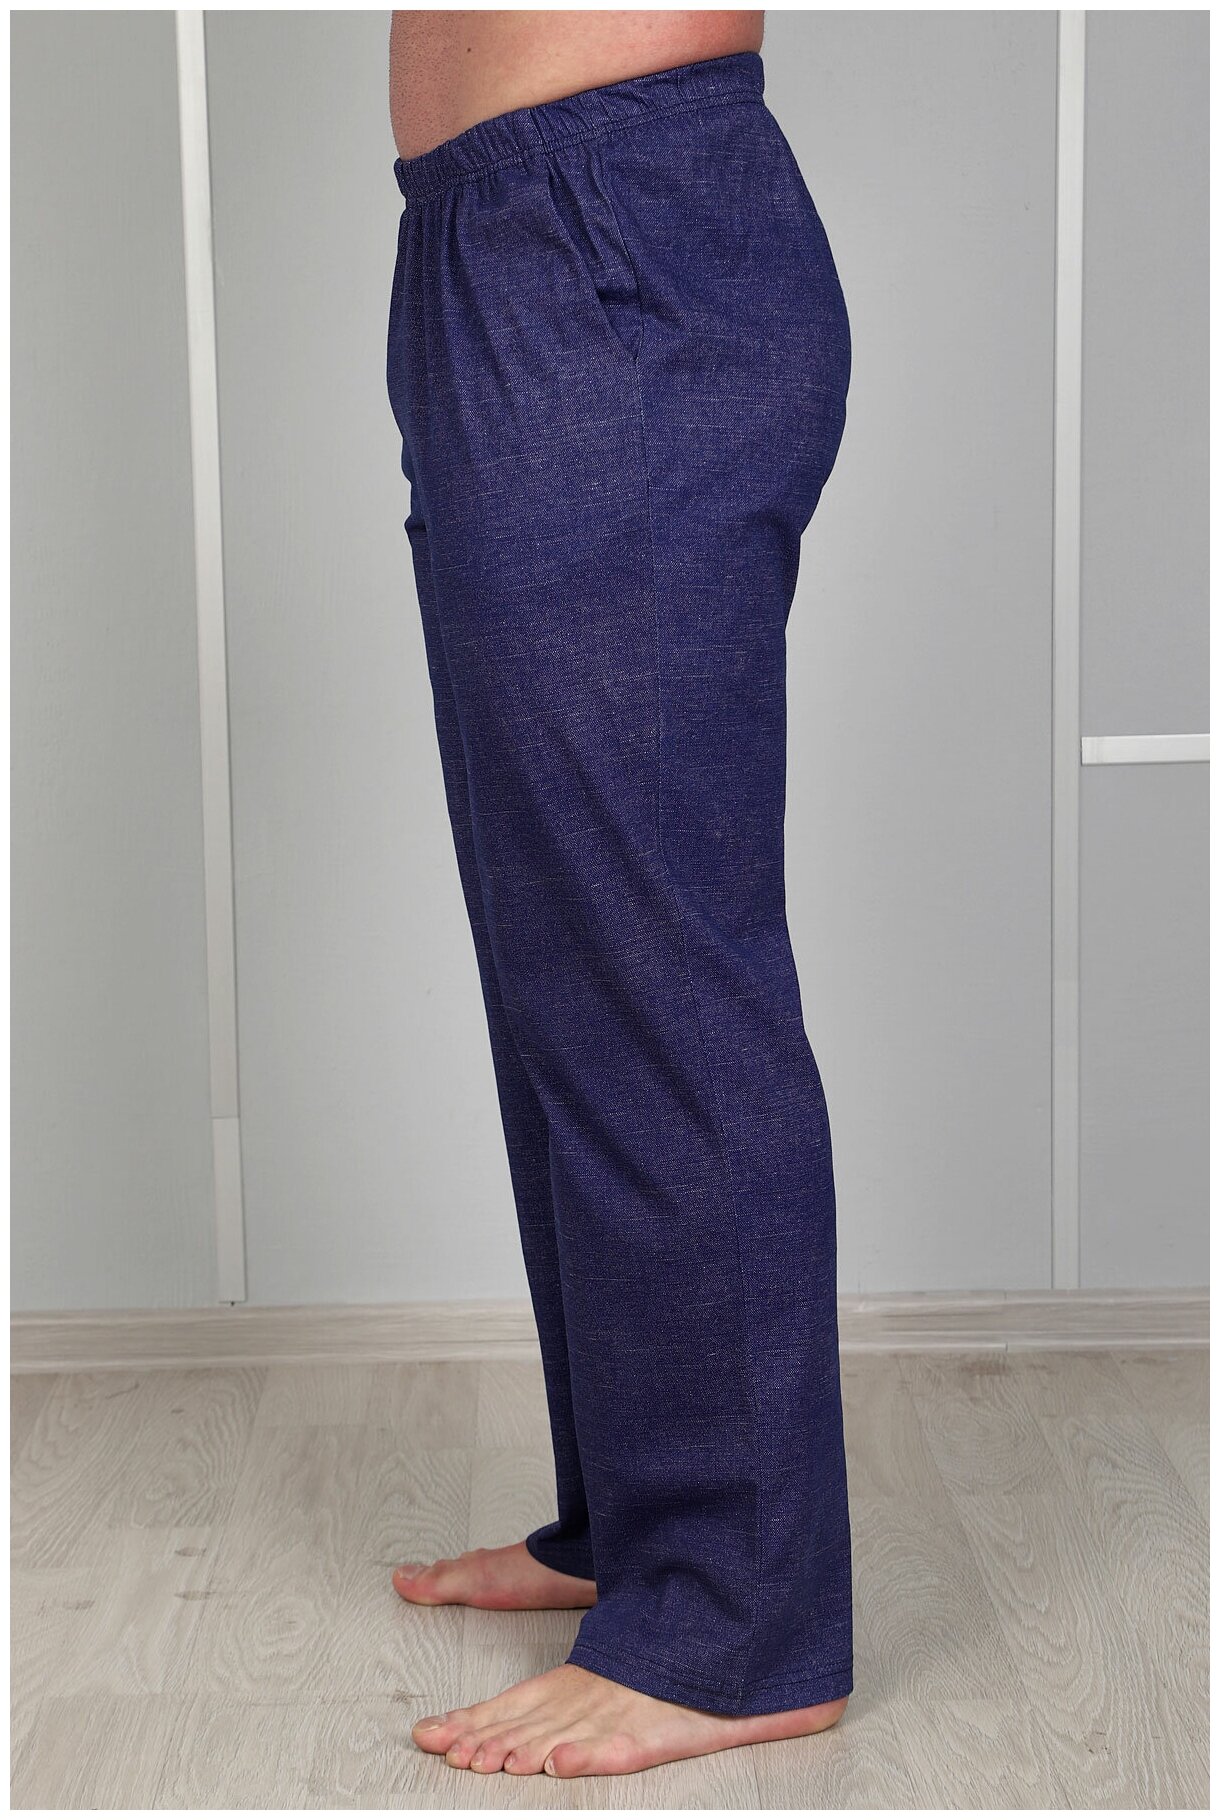 Мужские брюки арт. 22-0497 Синий размер 58 Кулирка Оптима трикотаж прямого кроя с карманами пояс на резинке - фотография № 3